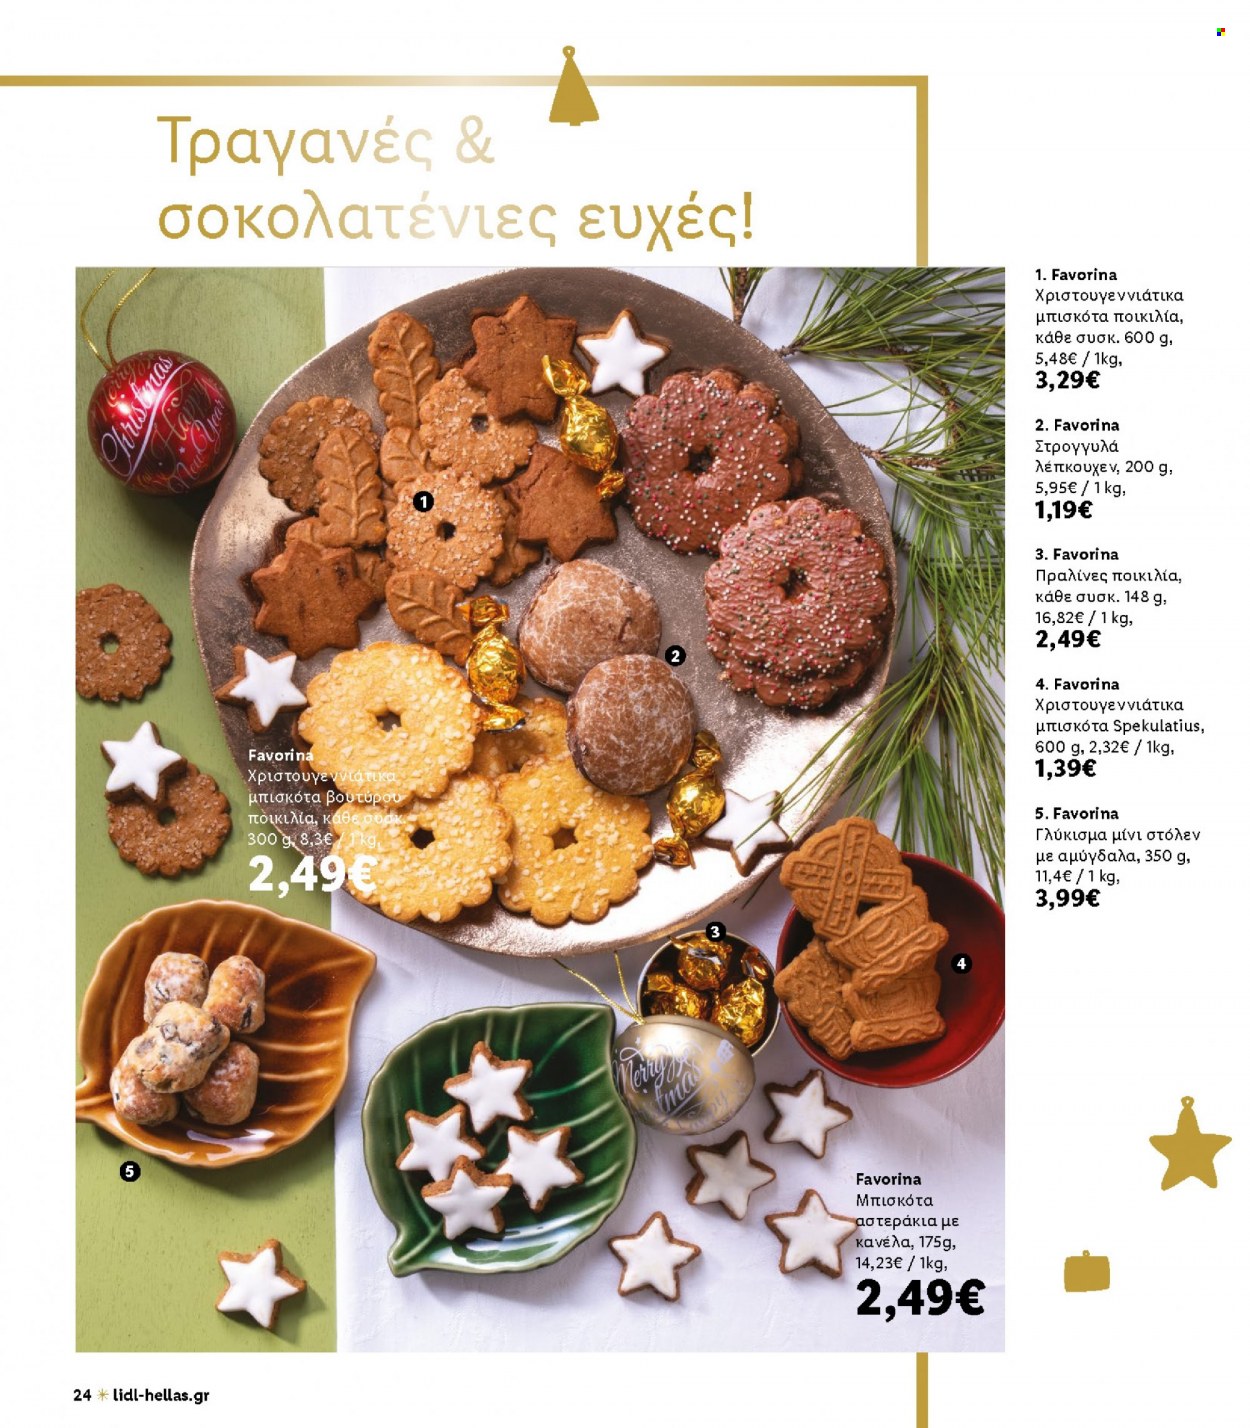 thumbnail - Φυλλάδια Lidl - Εκπτωτικά προϊόντα - μπισκότα, πραλίνες, favorina, αμύγδαλα. Σελίδα 24.